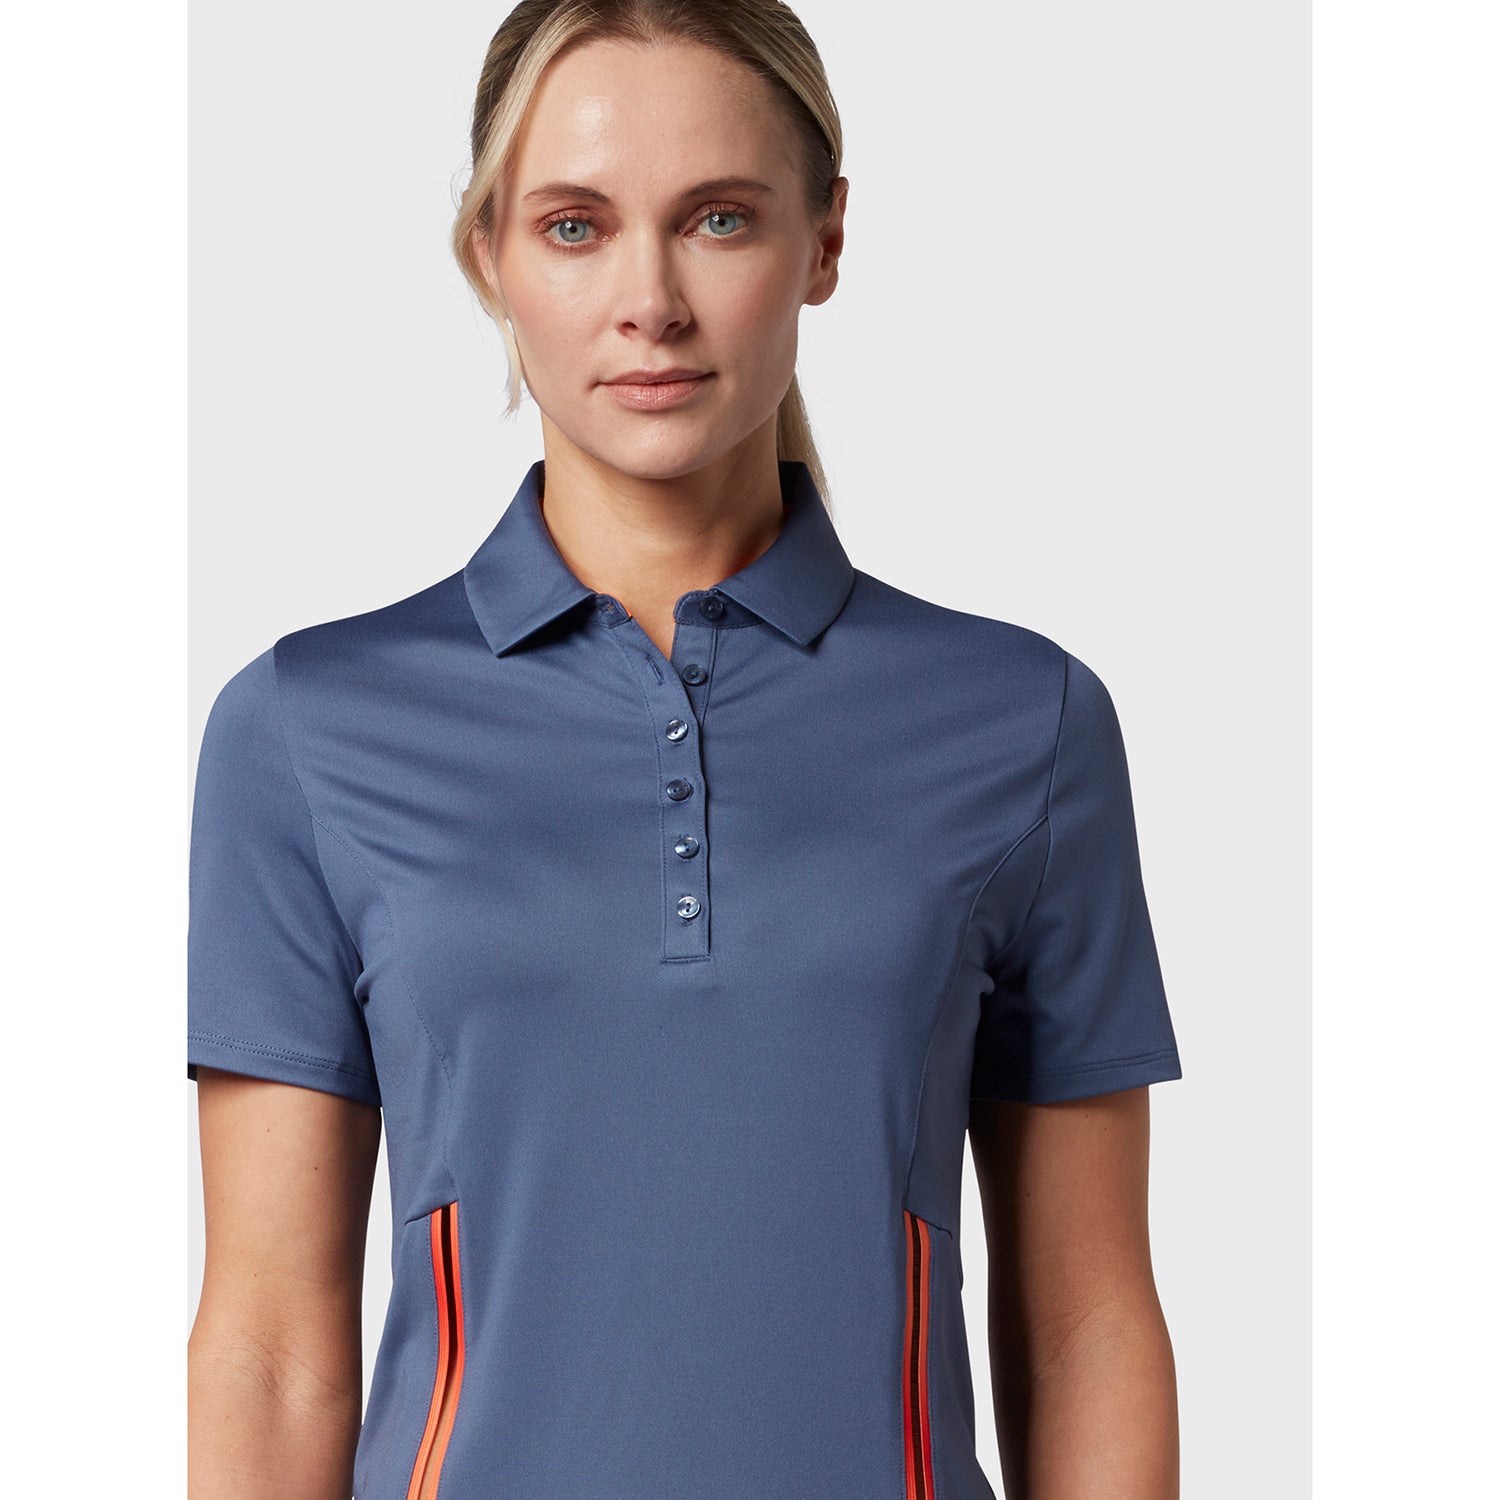 Callaway Ladies Short Sleeve Colorblock Golf Polo in Blue Indigo